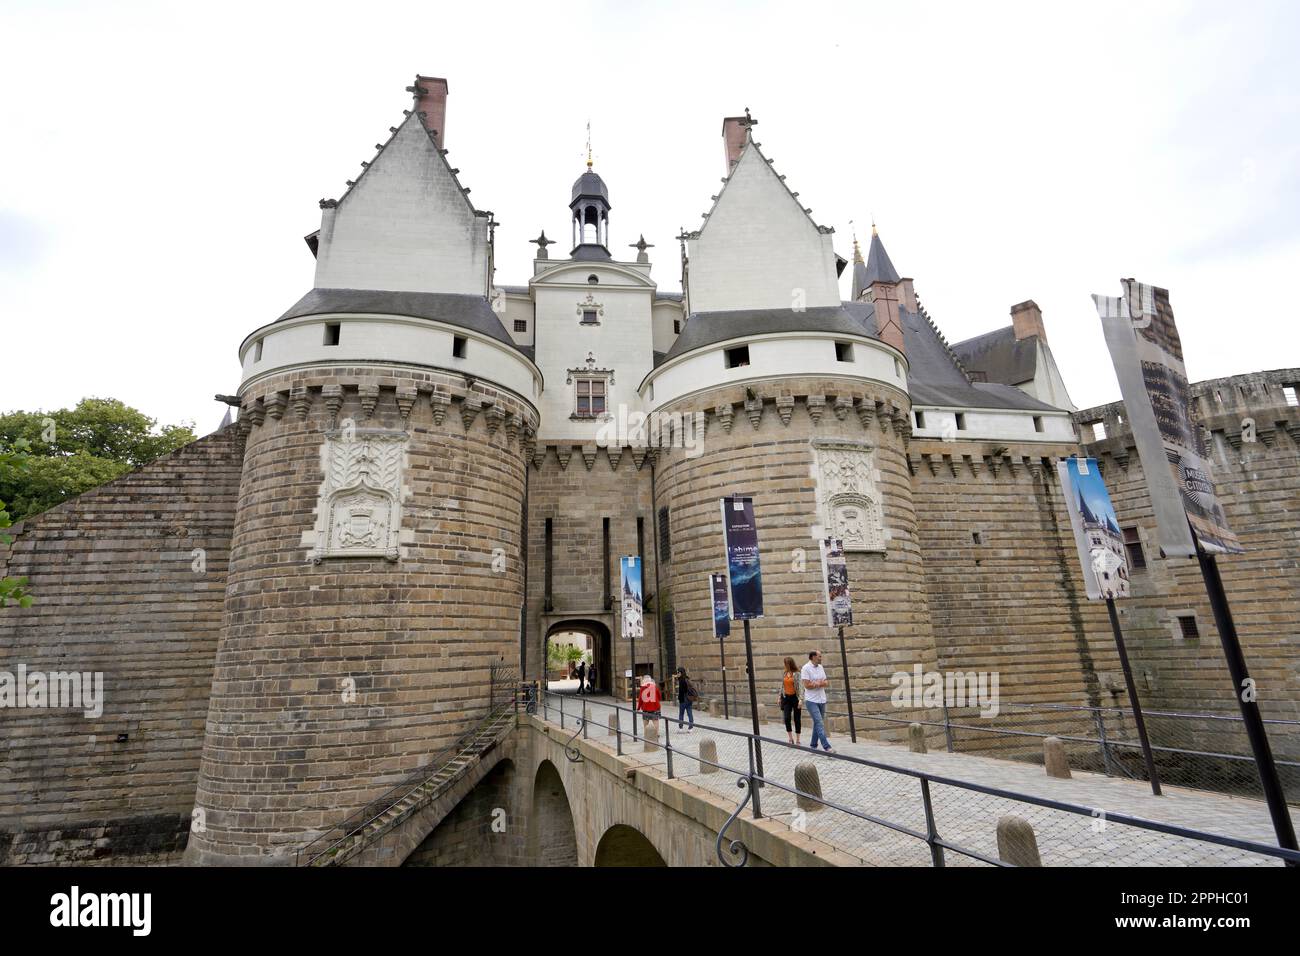 NANTES, FRANKREICH - 5. JUNI 2022: Das Chateau des ducs de Bretagne ist ein Schloss in Nantes, Frankreich Stockfoto